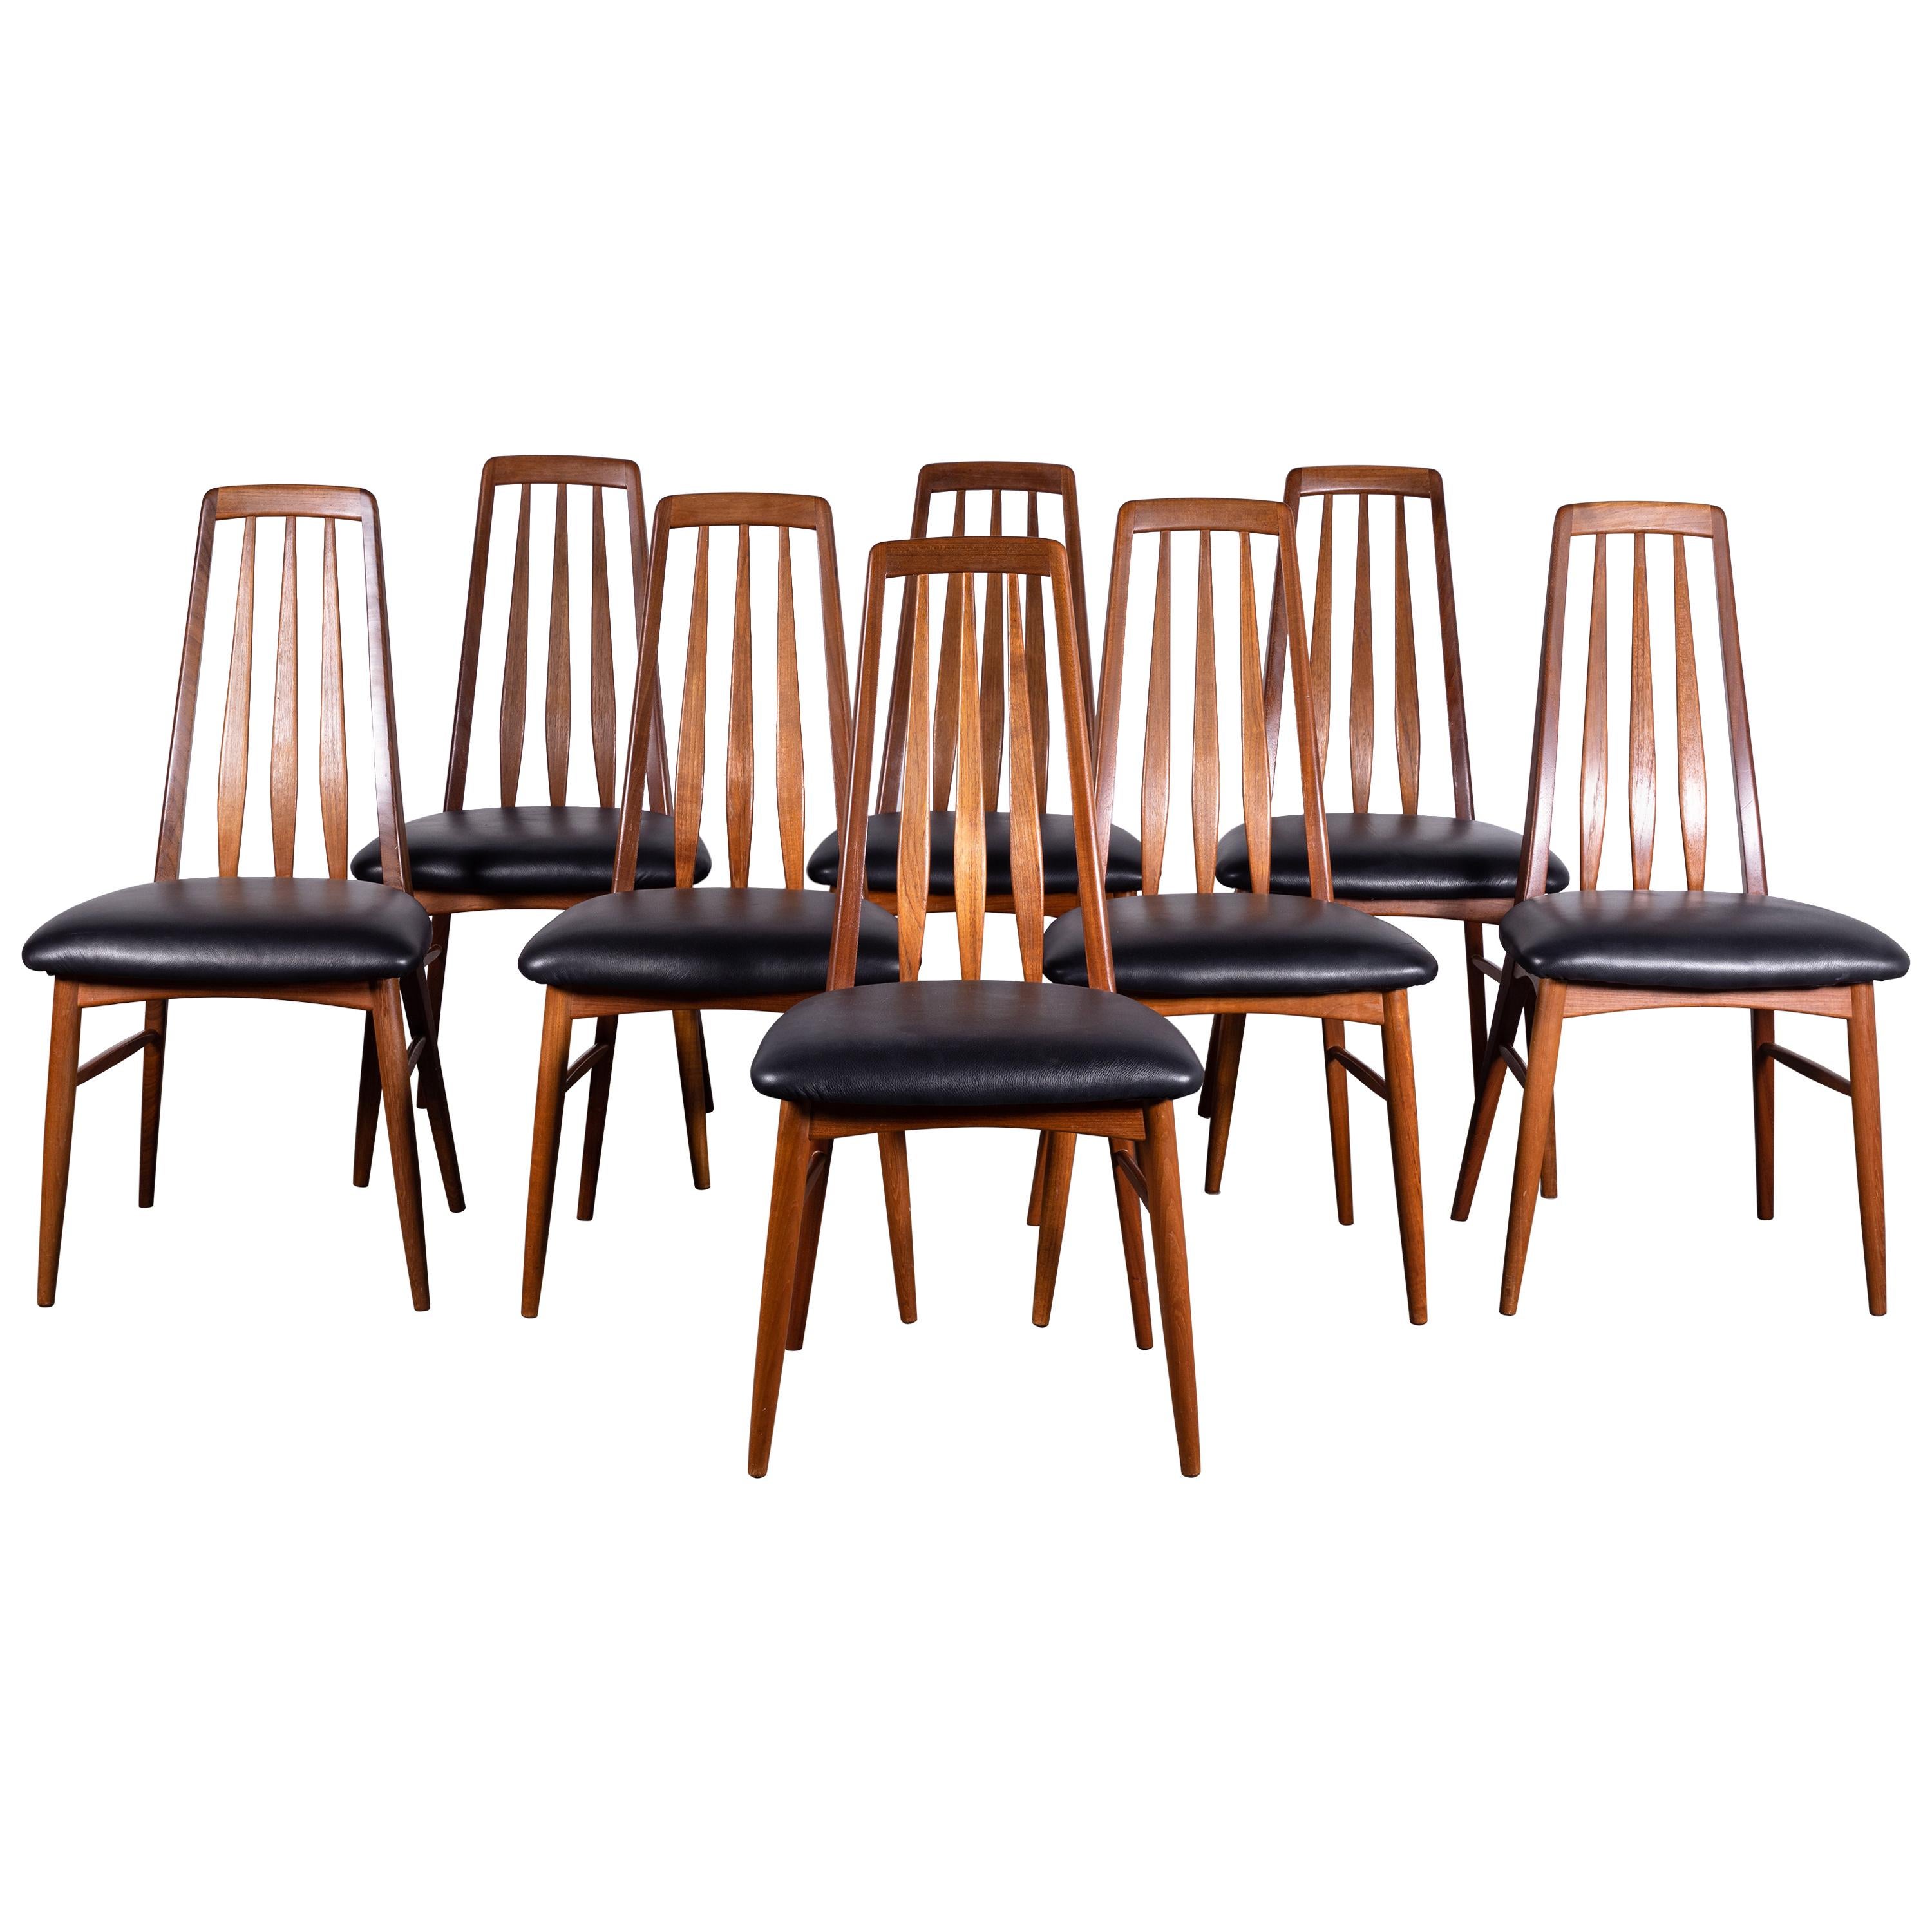 8 "Eva" Teak and Black Leather Dining Chairs by Koefoed for Hornslet Denmark